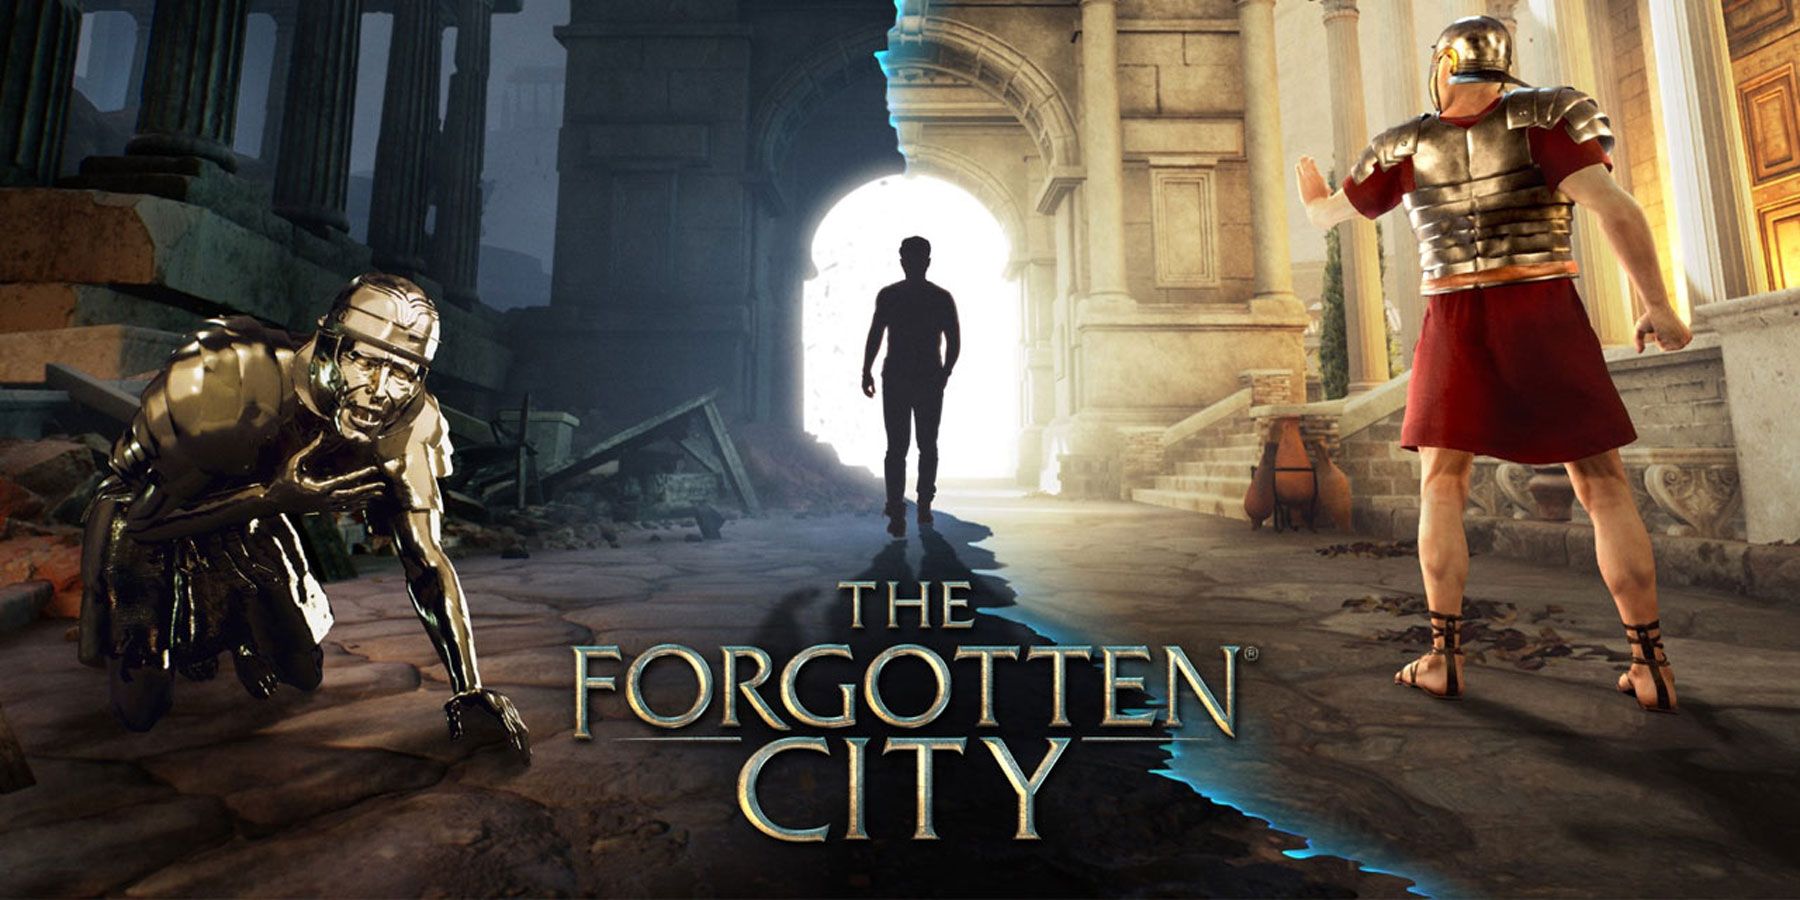 the-forgotten-city-cover-art